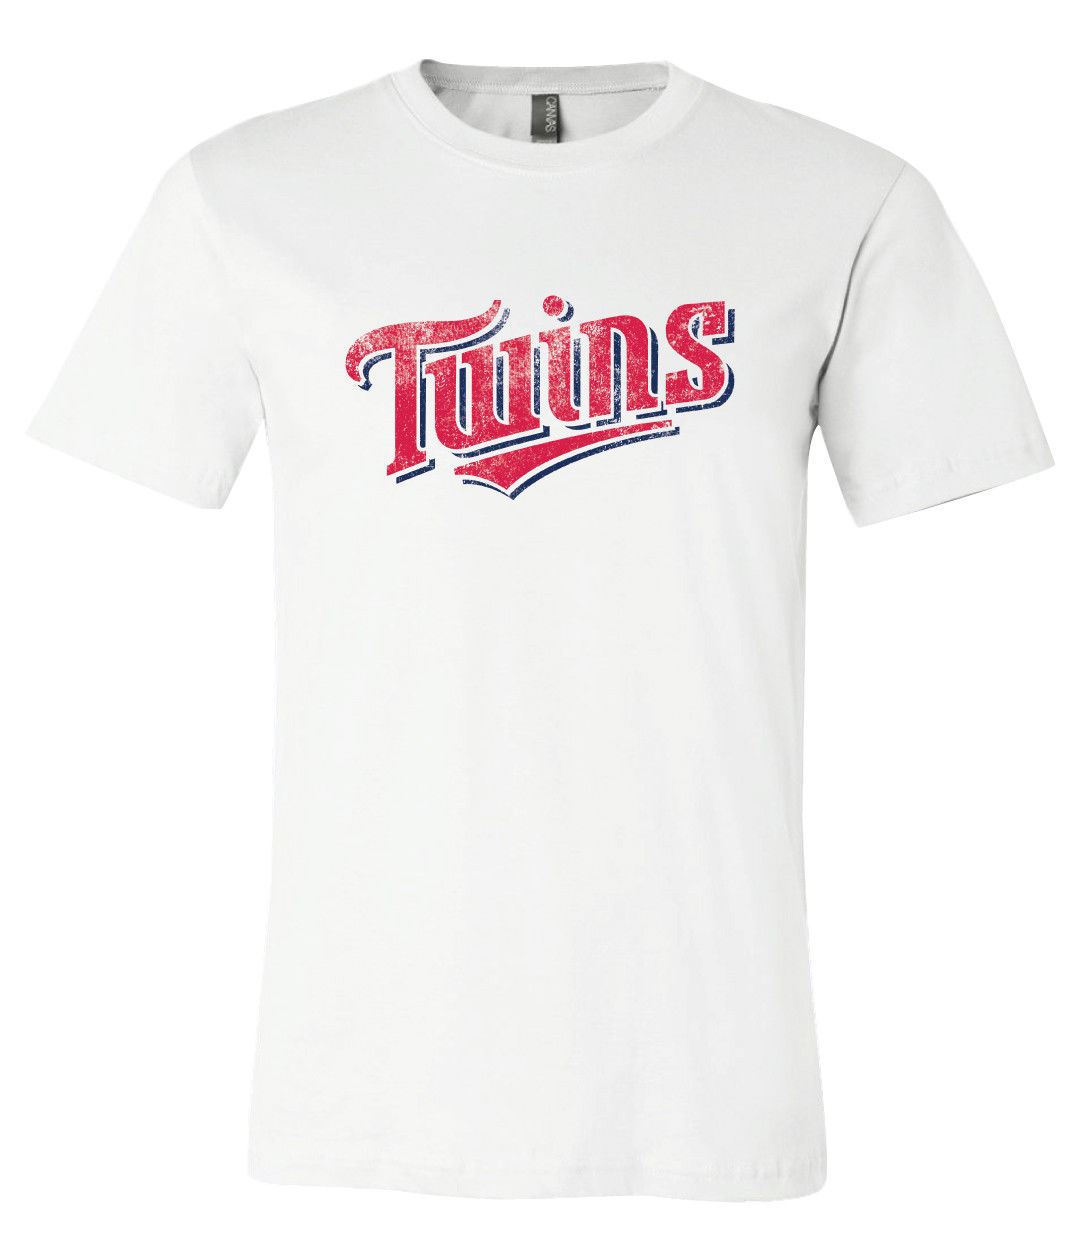 Minnesota Twins Text logo Distressed Vintage logo T-shirt 6 Sizes S-3X